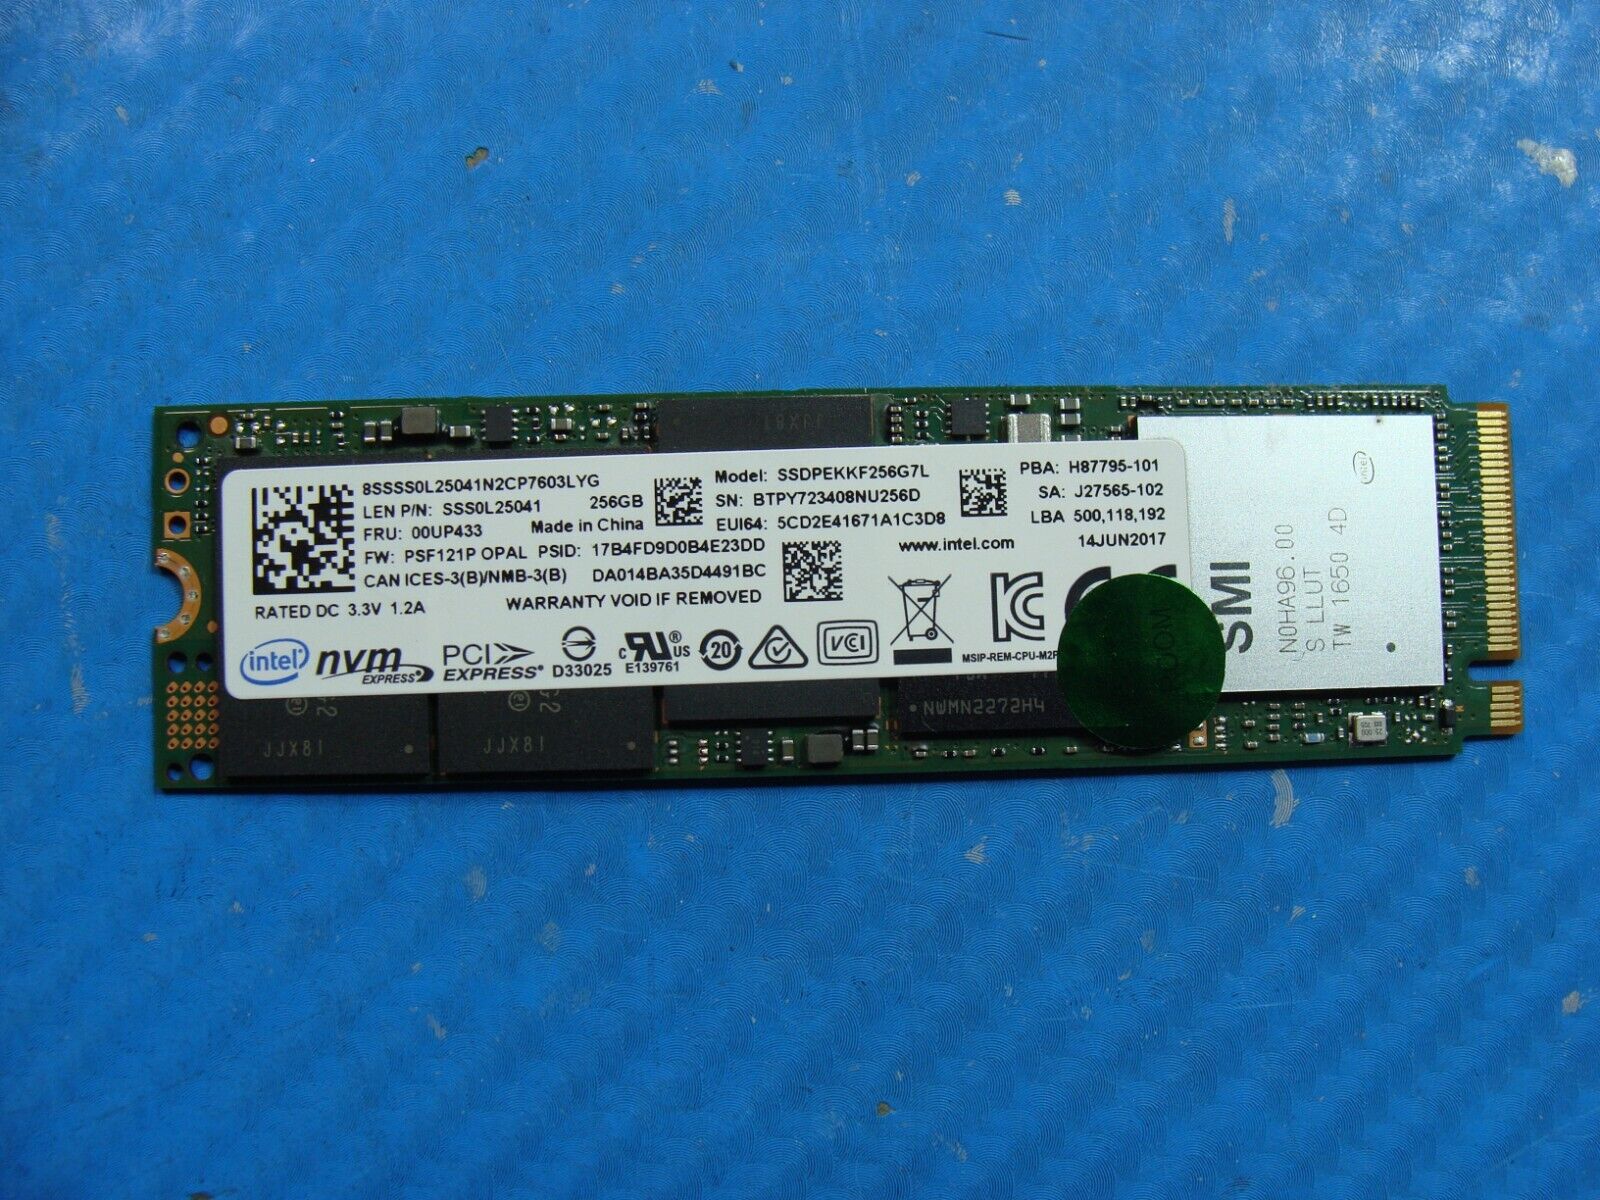 Lenovo T470s Intel 256GB NVMe M.2 SSD Solid State Drive SSDPEKKF256G7L 00UP433